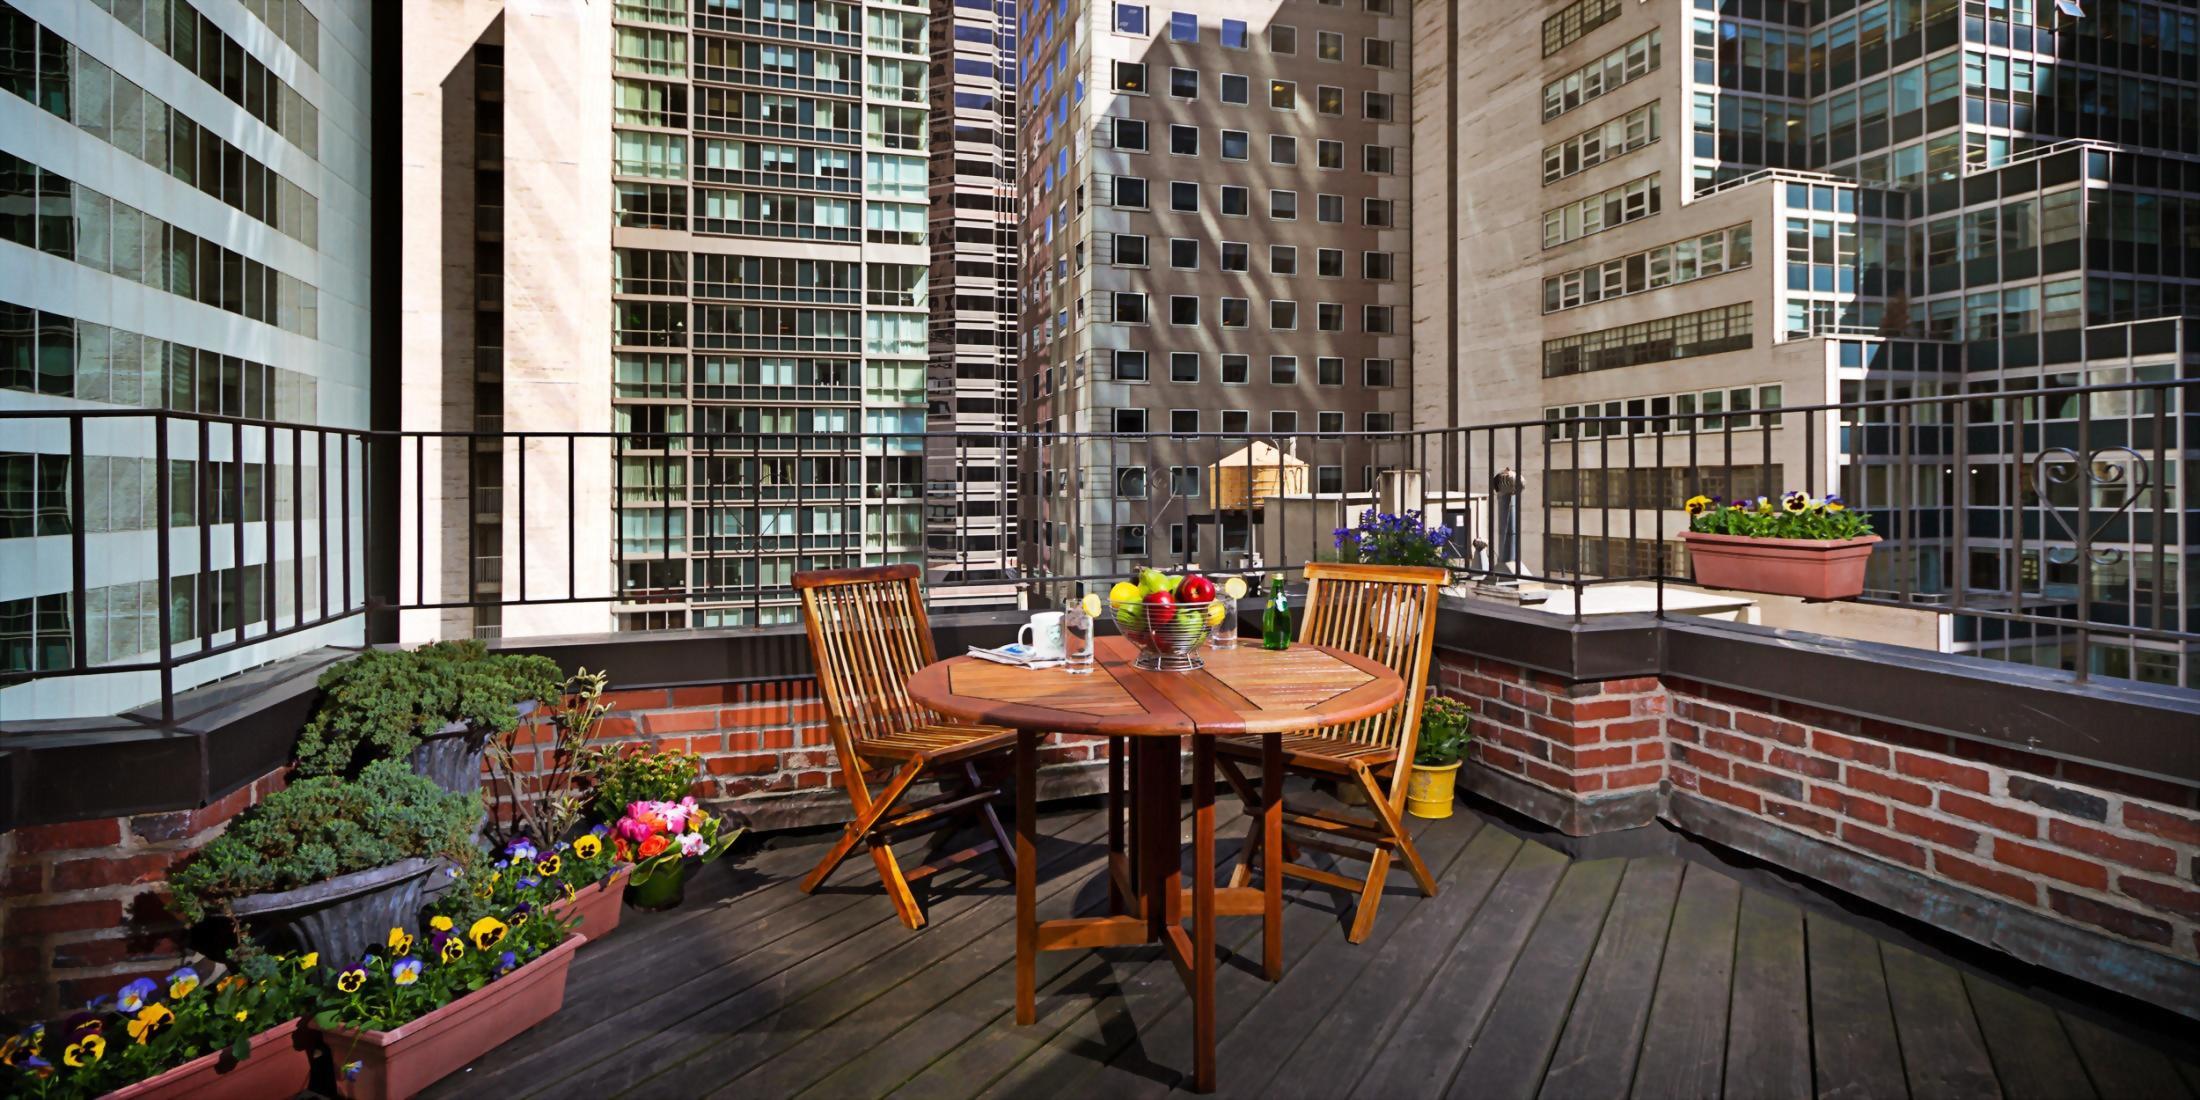 Hotel Elysée has 4 very special rooms with outdoor terraces overlooking 54th Street in Midtown.